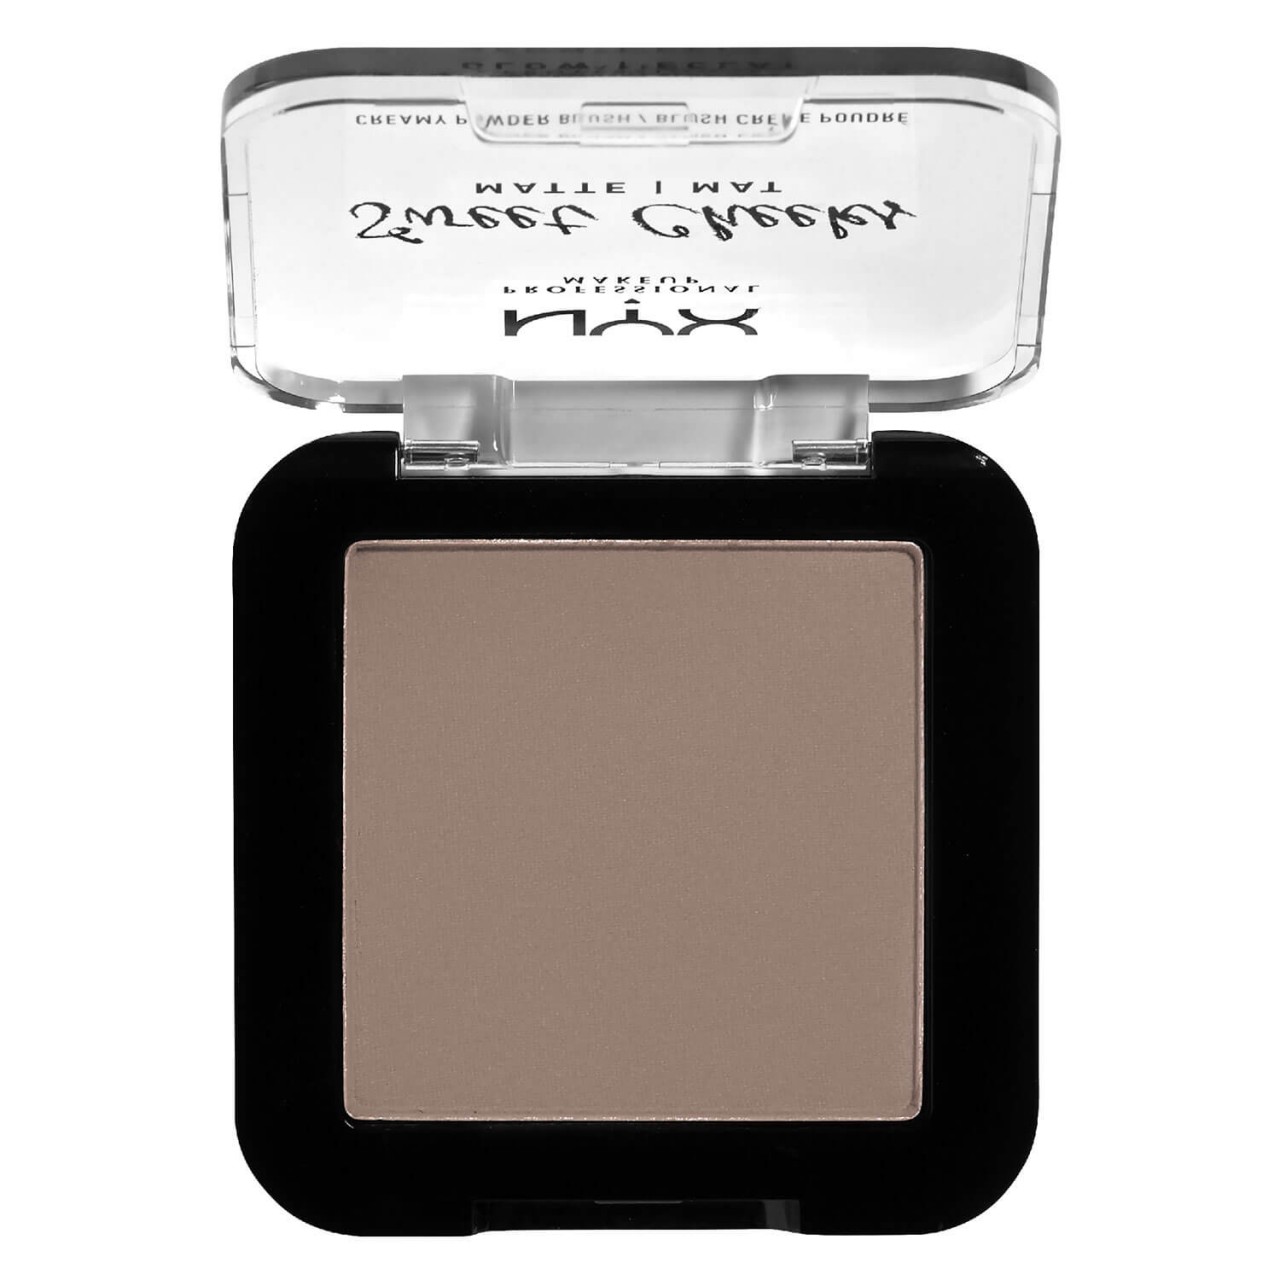 Sweet Cheeks - Creamy Powder Blush Matte So Taupe von NYX Professional Makeup